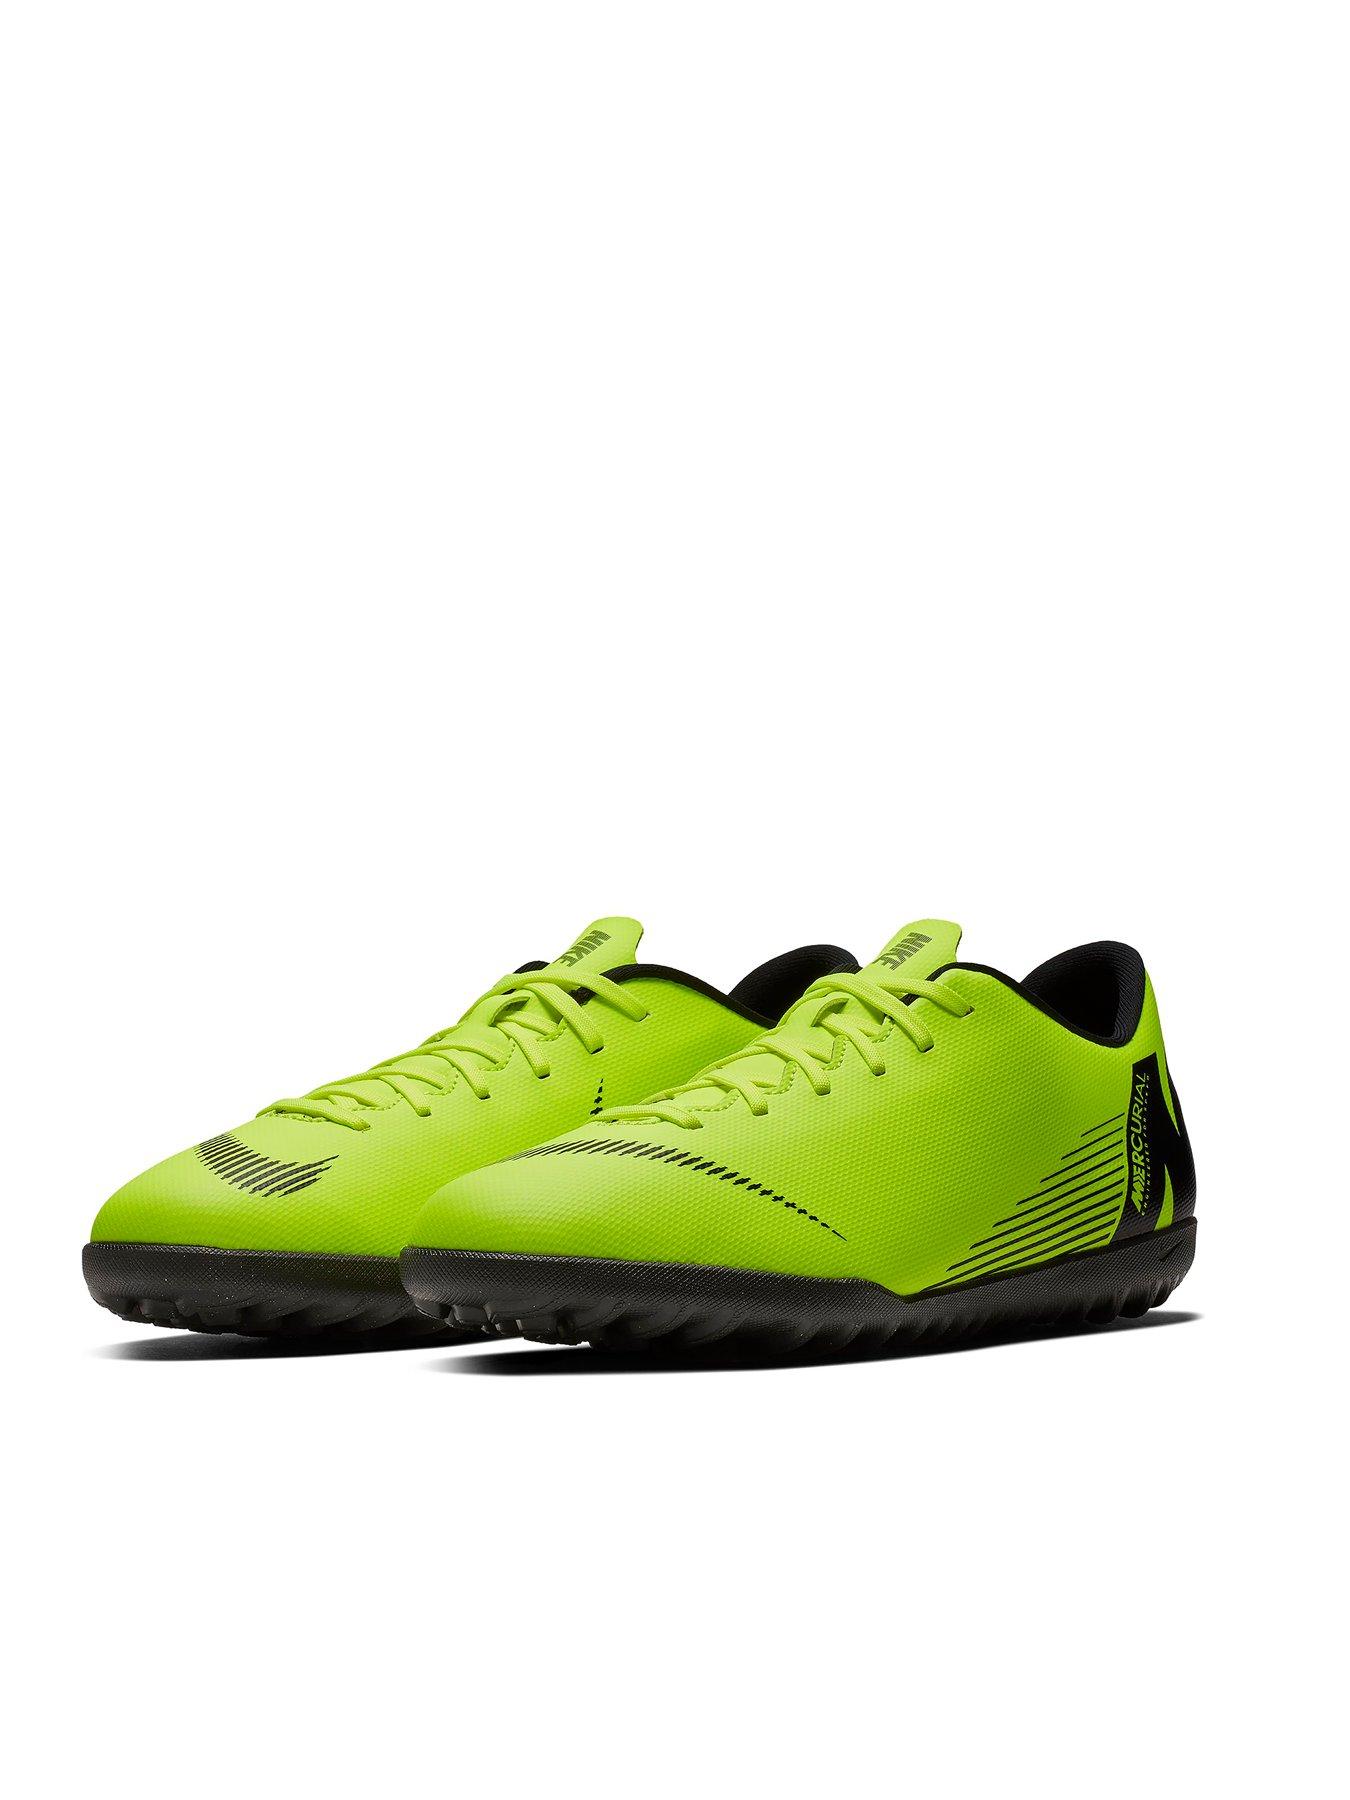 Review of Nike Mercurial Vapor XI Leather Tech Craft FG (Men's